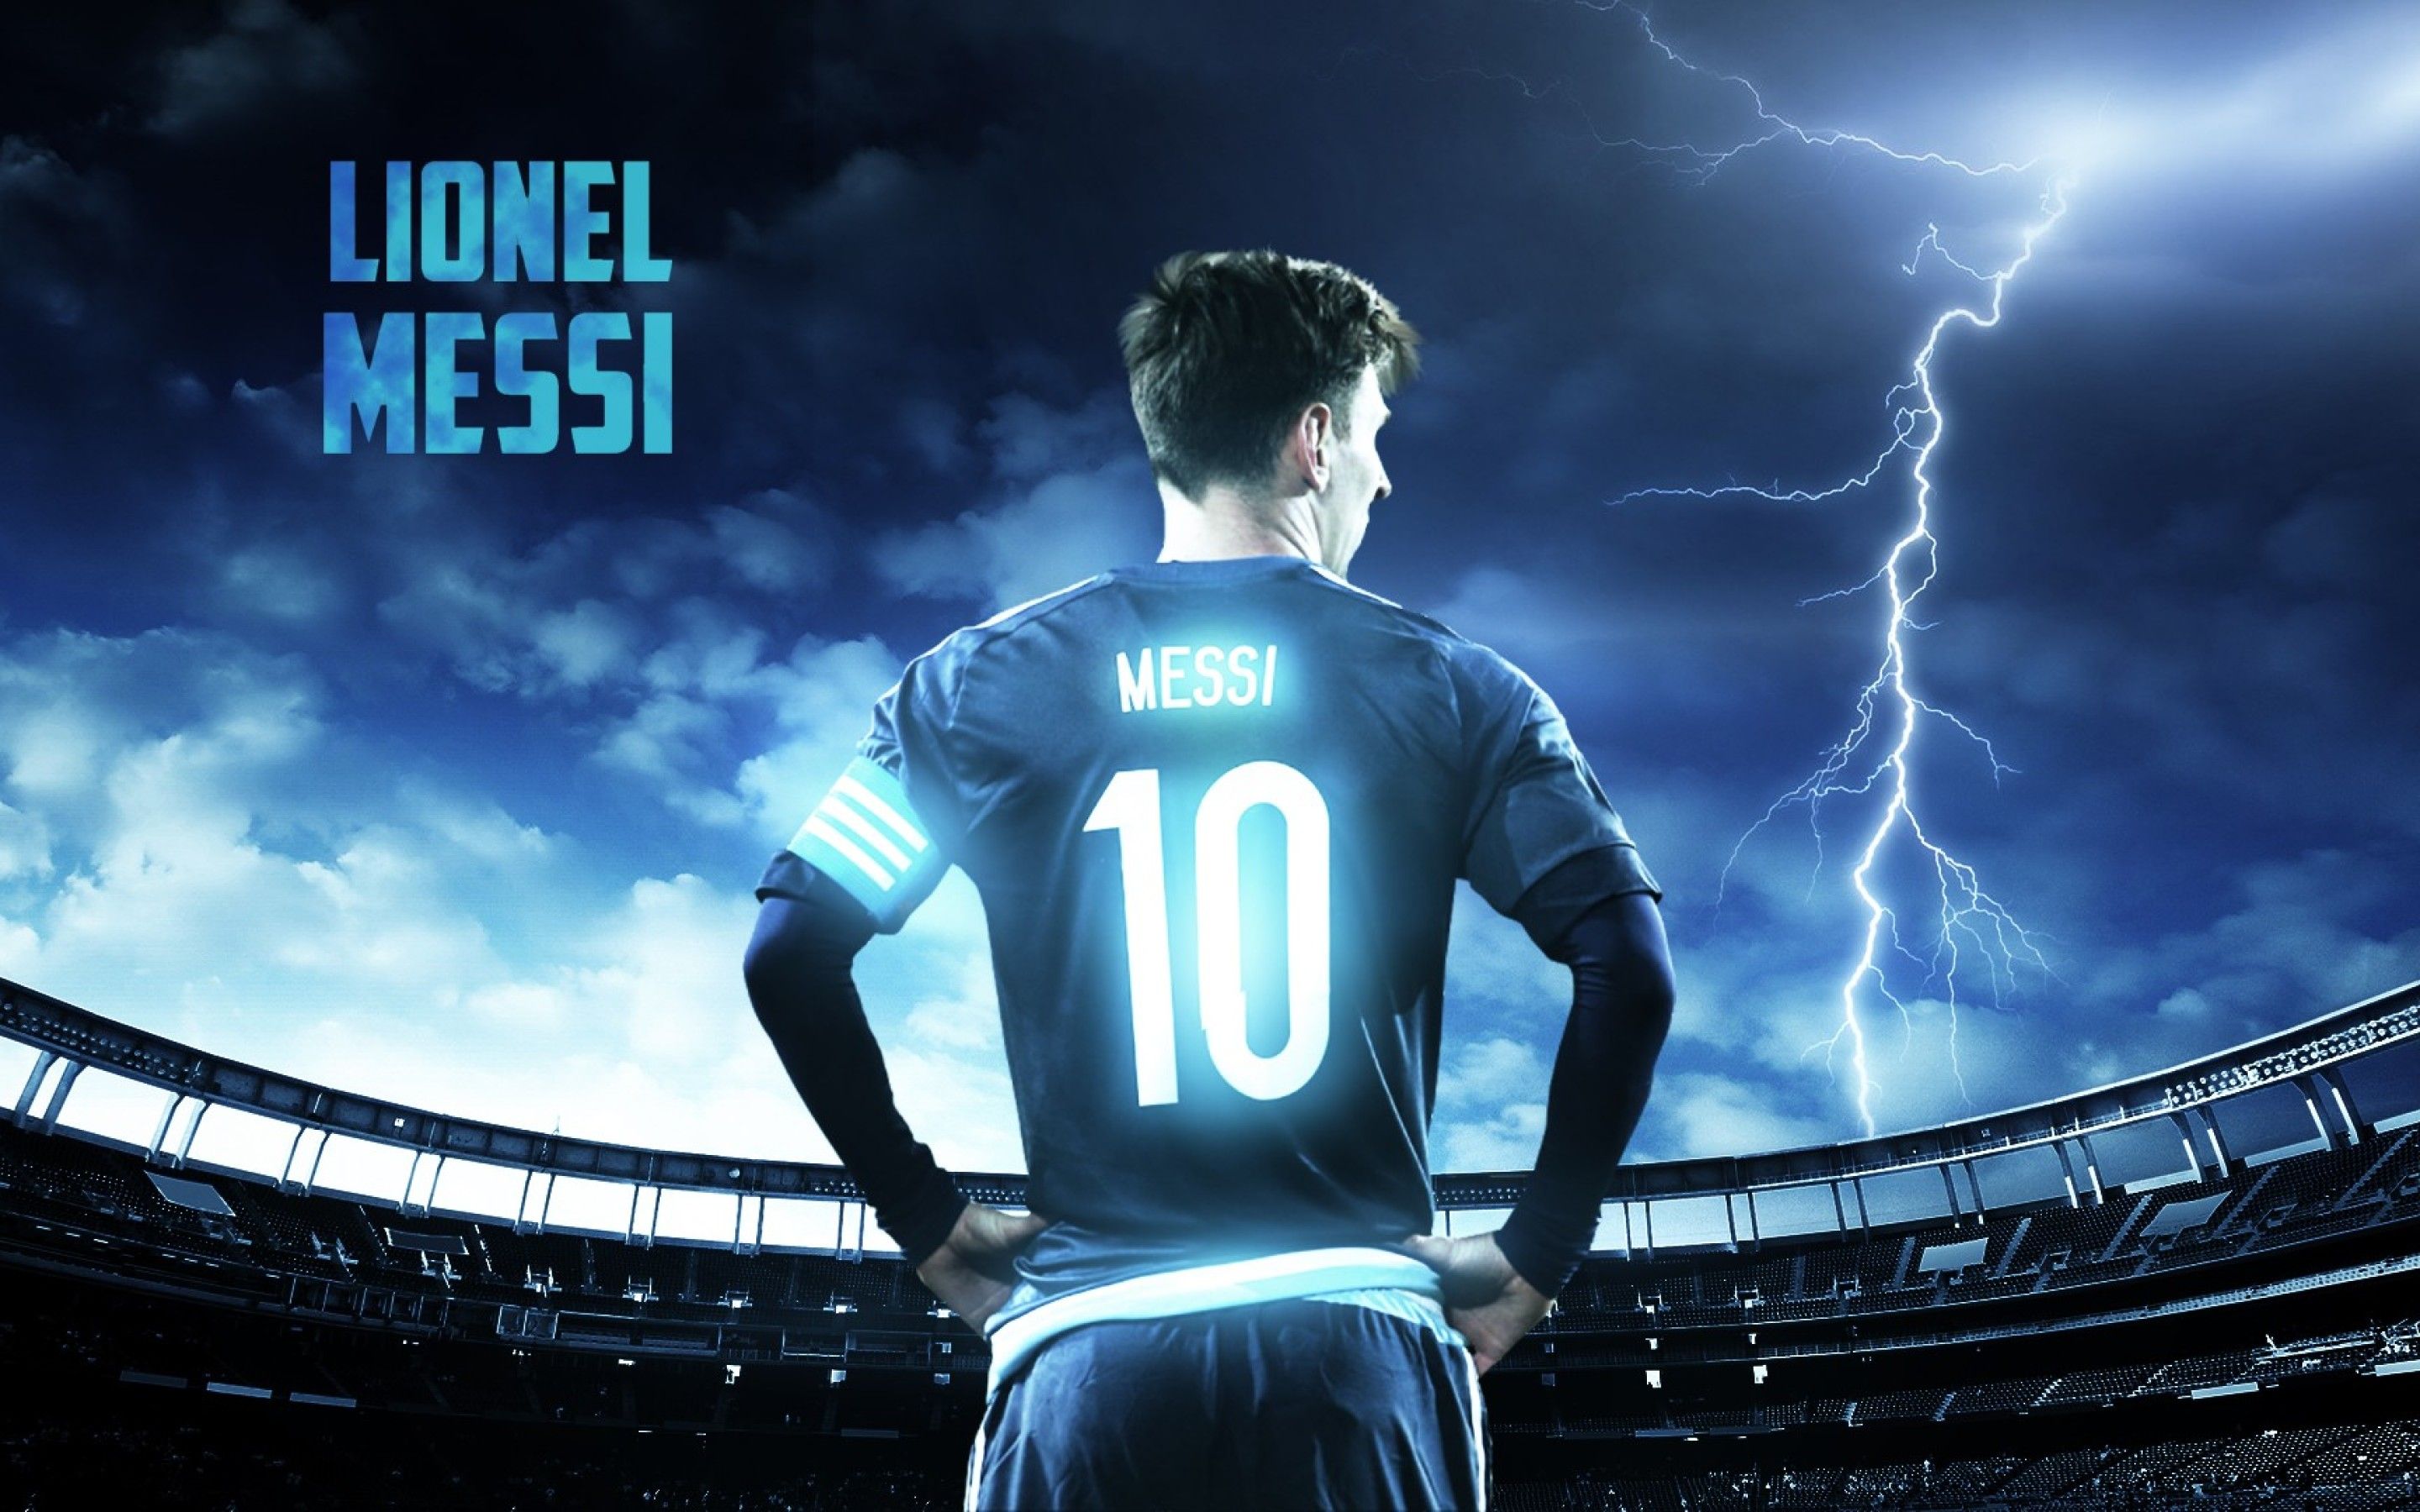 Leo Messi Macbook Pro Retina HD 4k Wallpaper, Image, Background, Photo and Picture